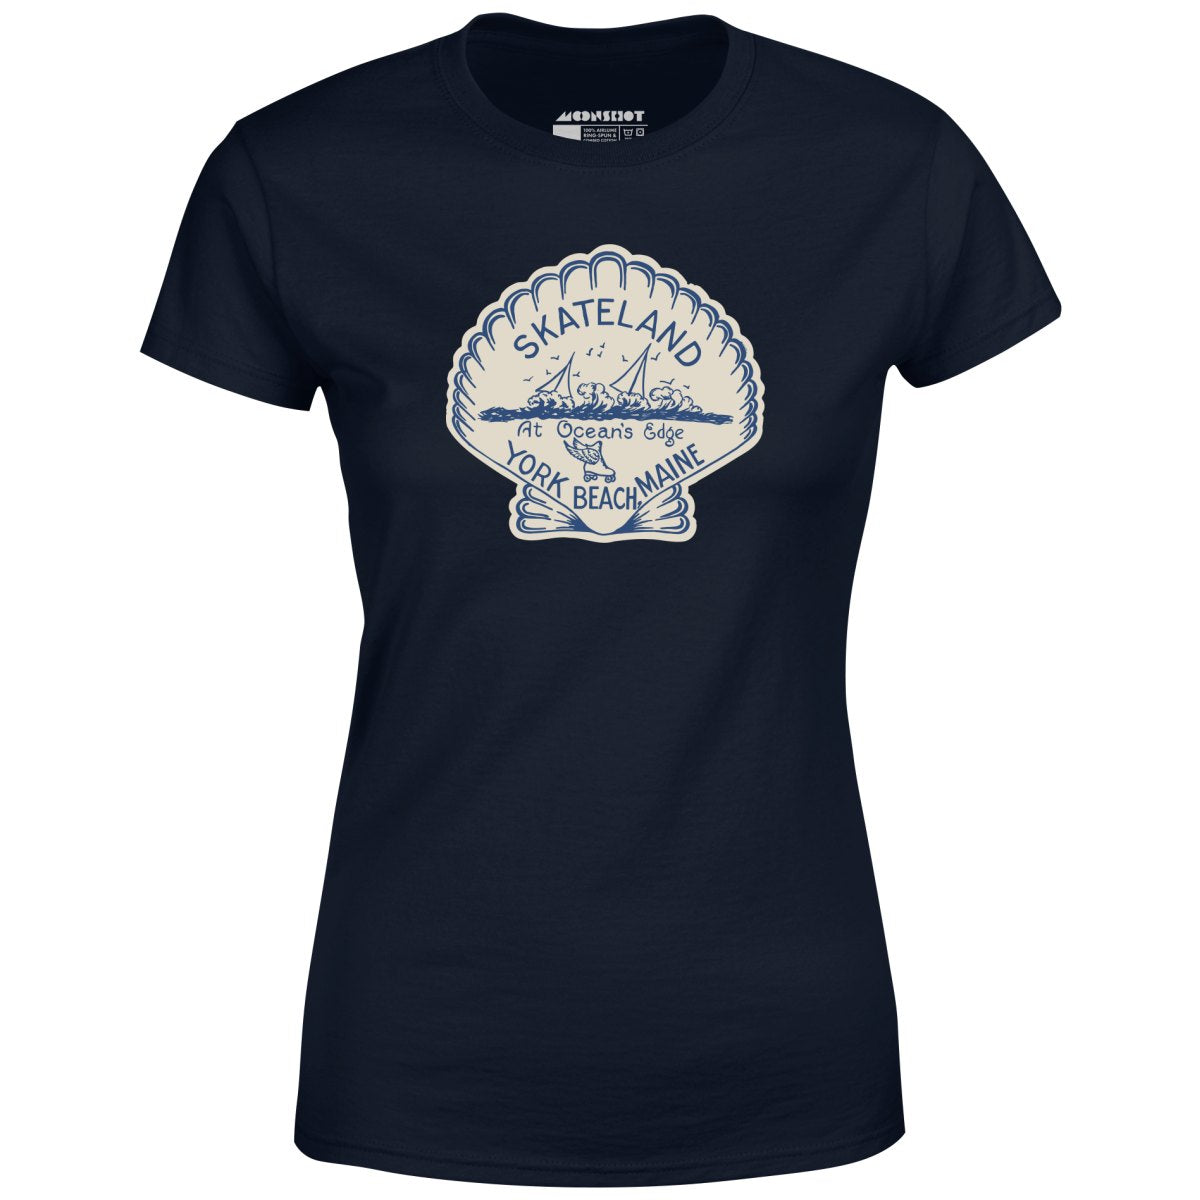 Skateland - York Beach, ME - Vintage Roller Rink - Women's T-Shirt